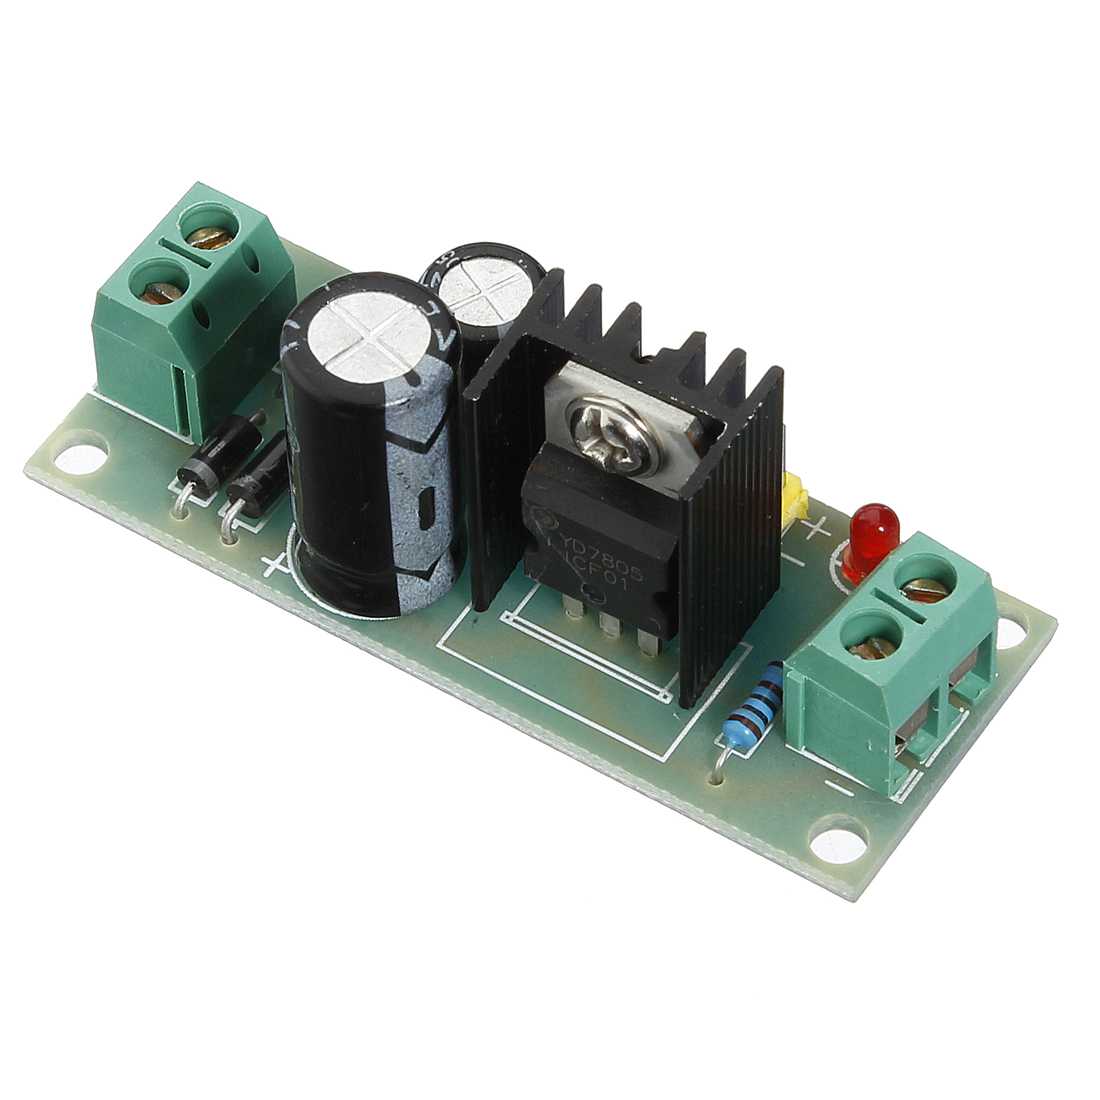 L7805-LM7805-Three-Terminal-Voltage-Regulator-Module-72966